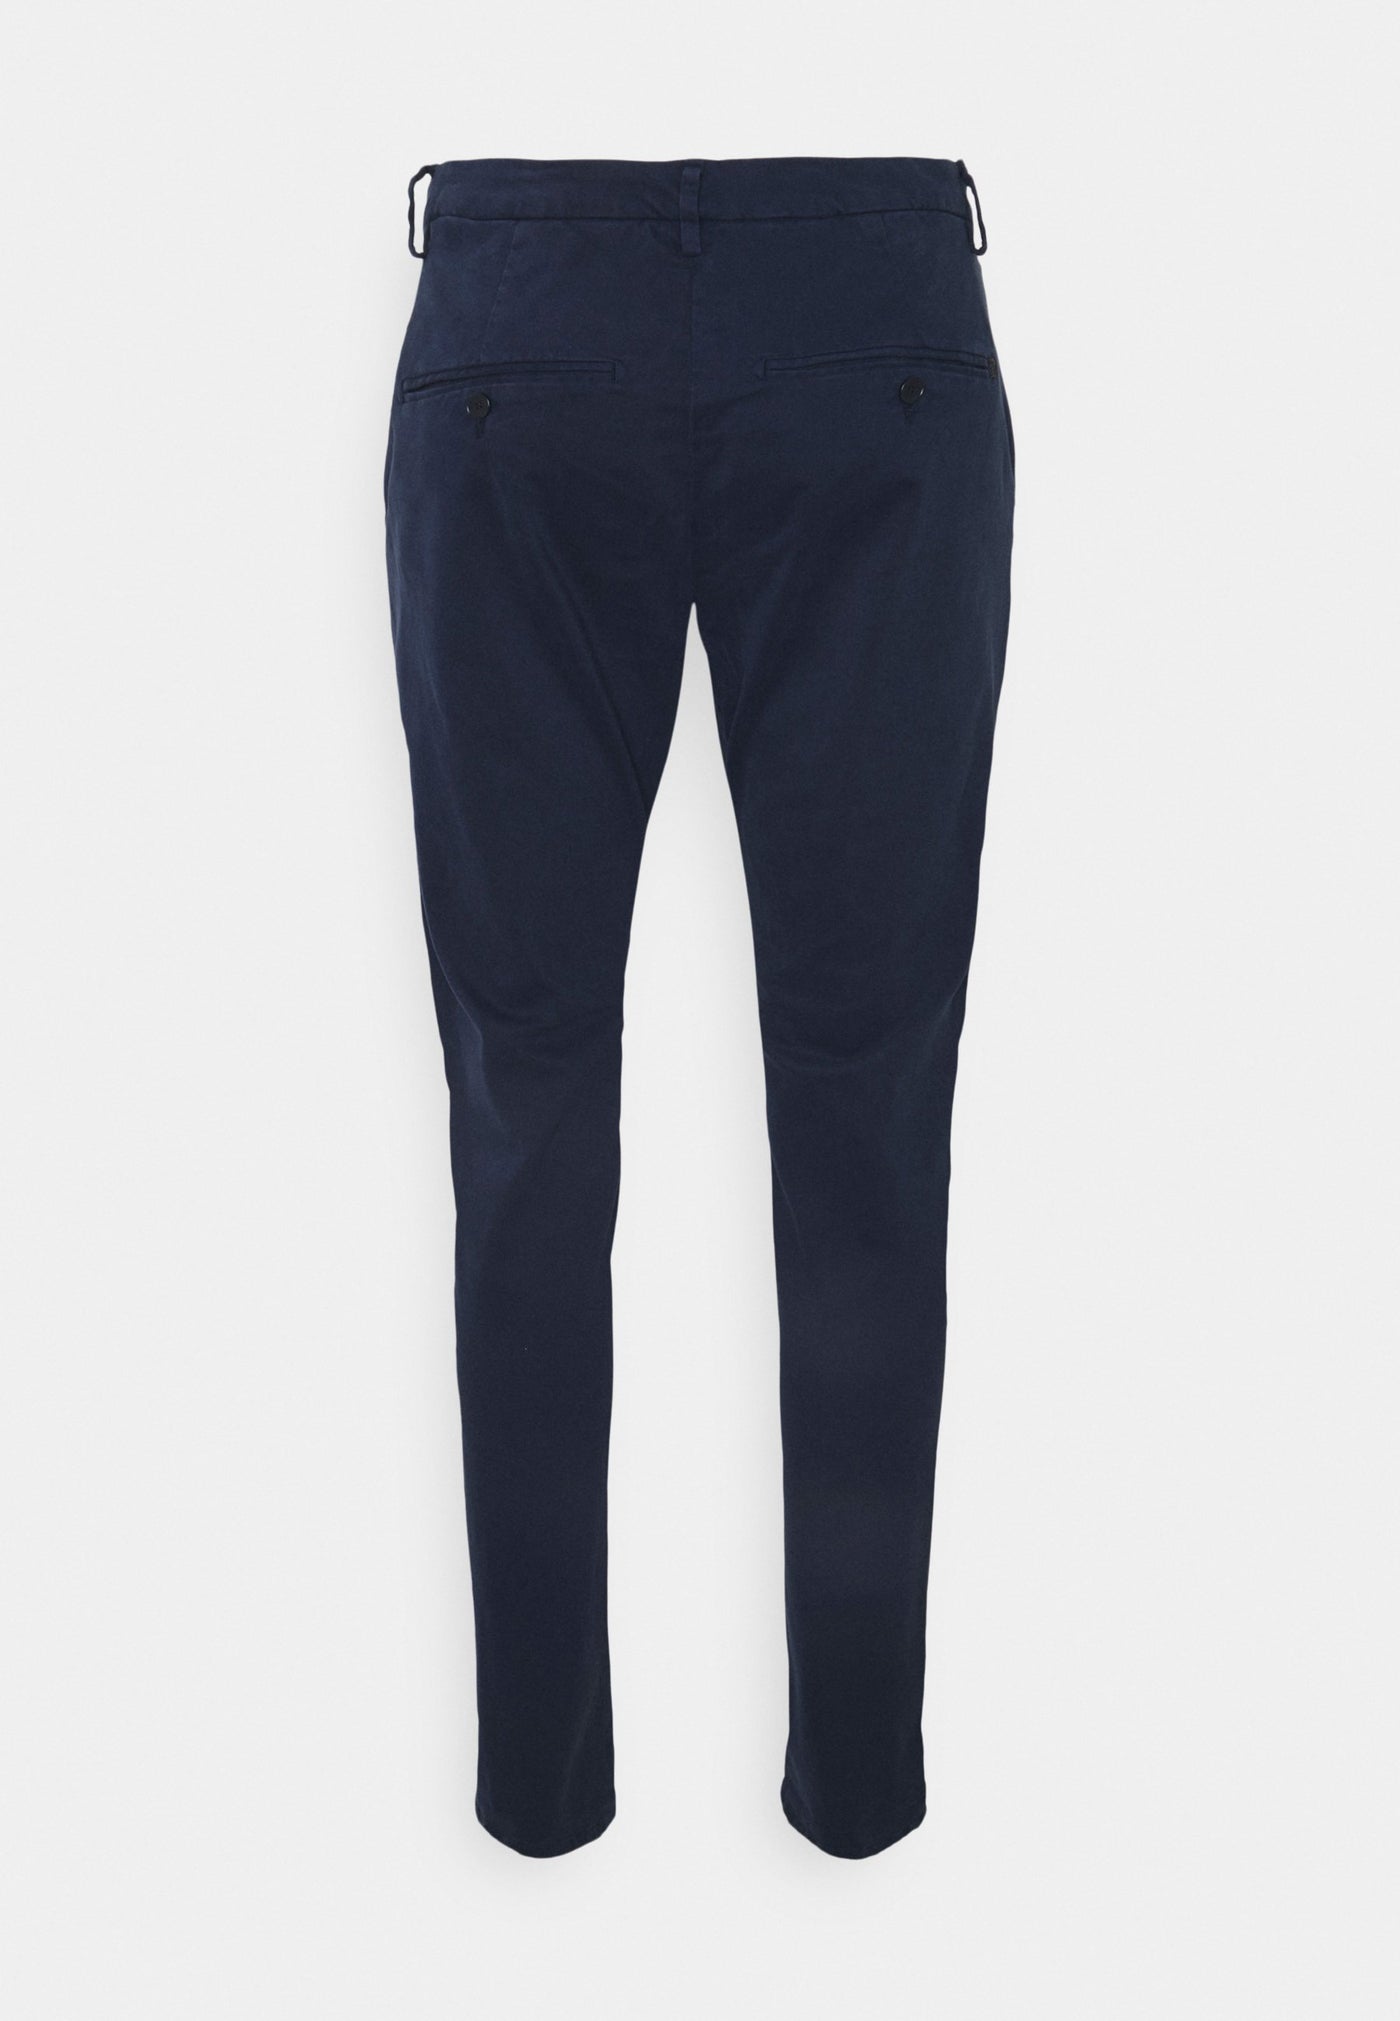 Medium-waisted men's trousers